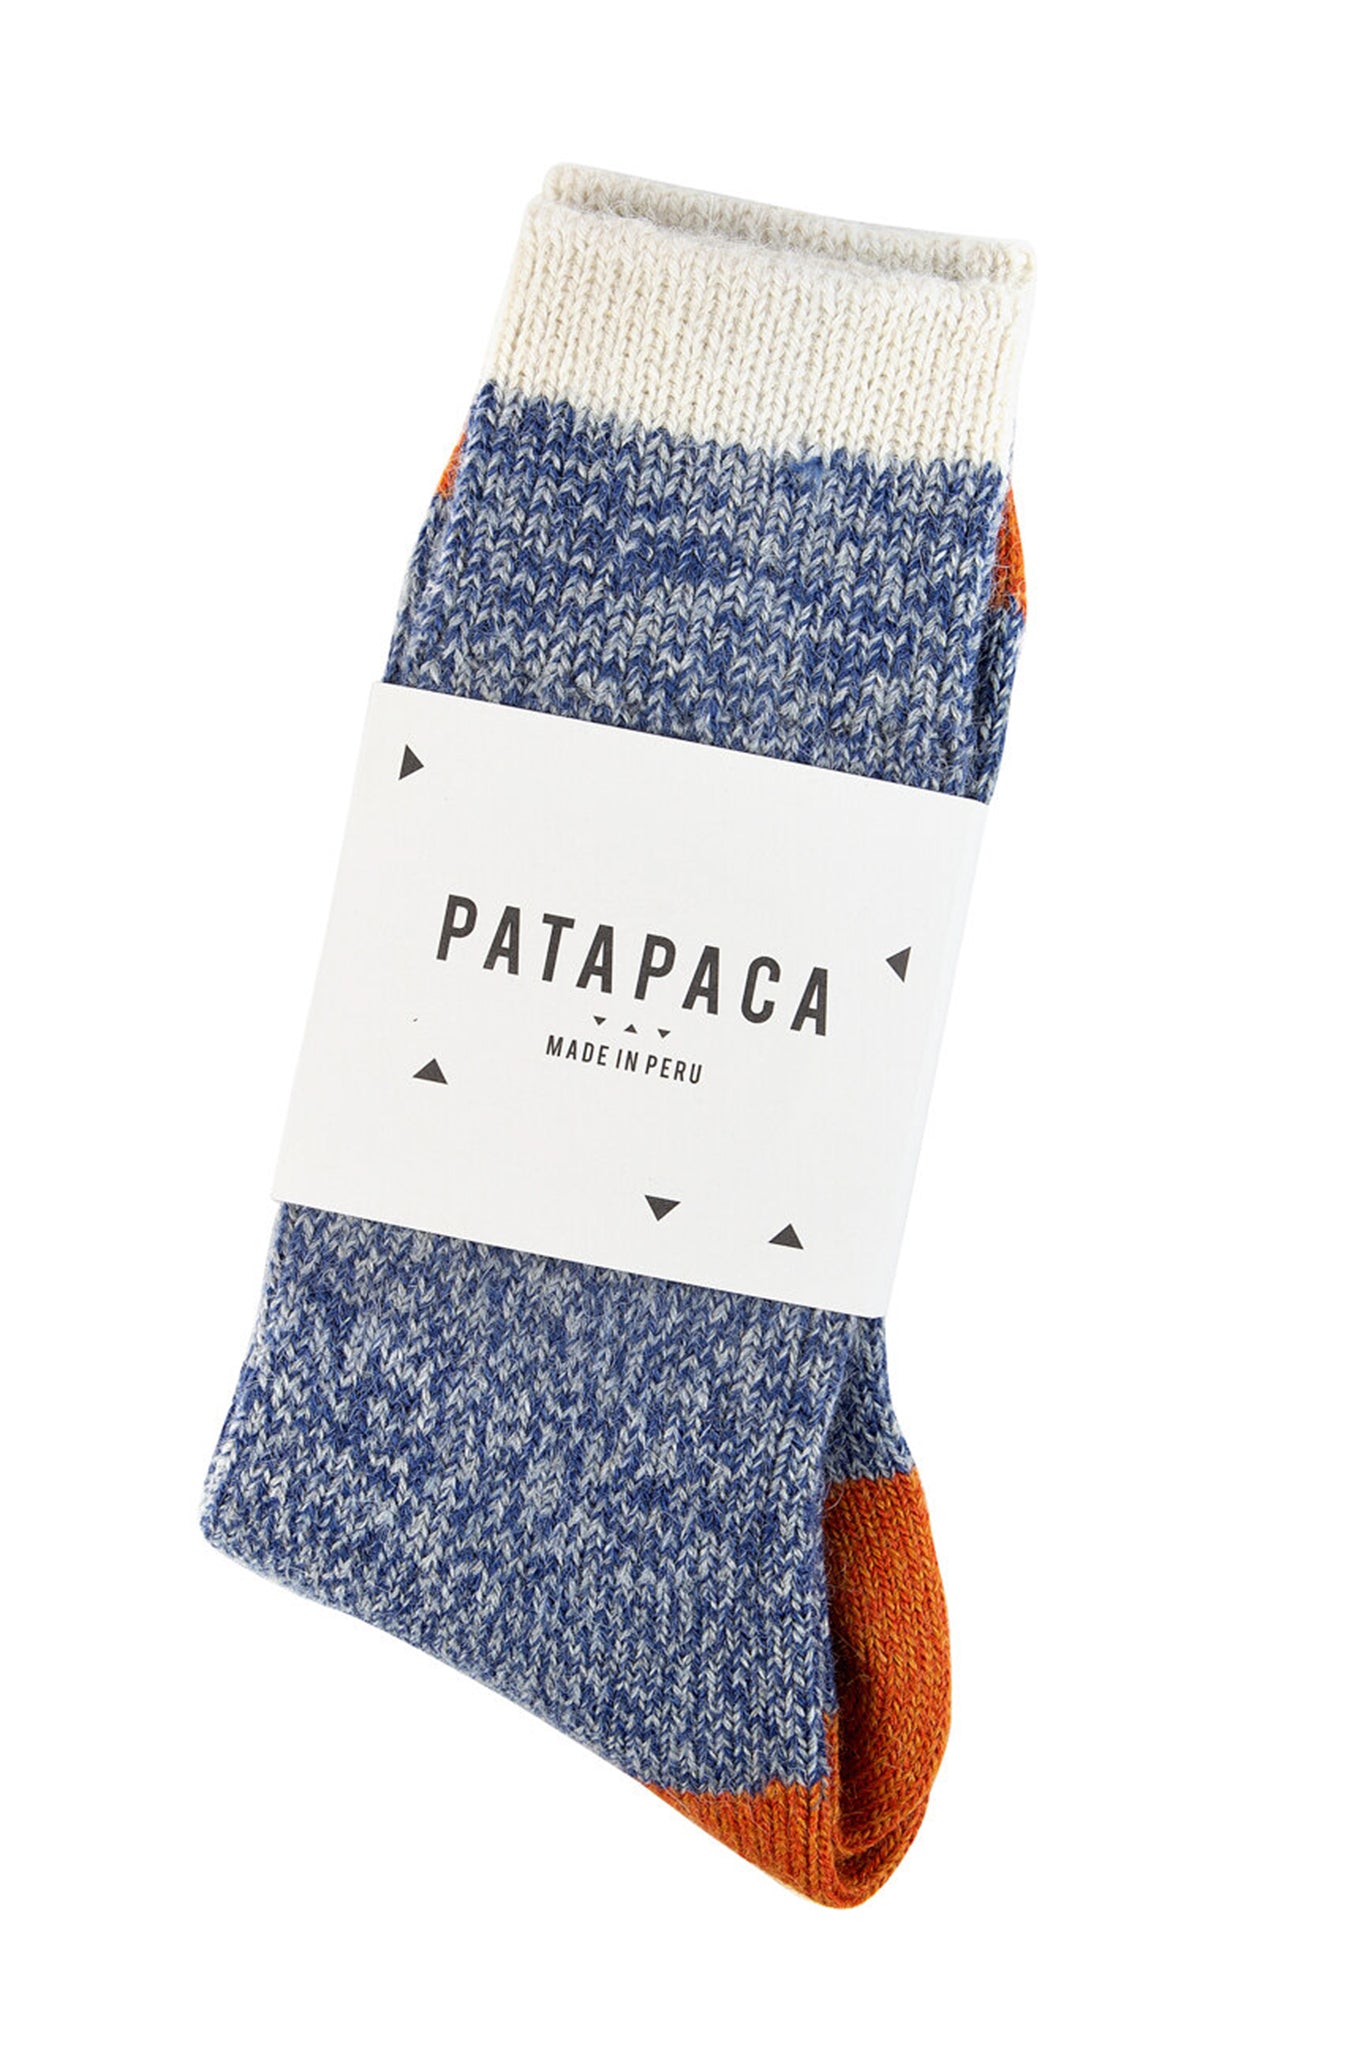 Pata Paca Socks - Melange Blue + Orange